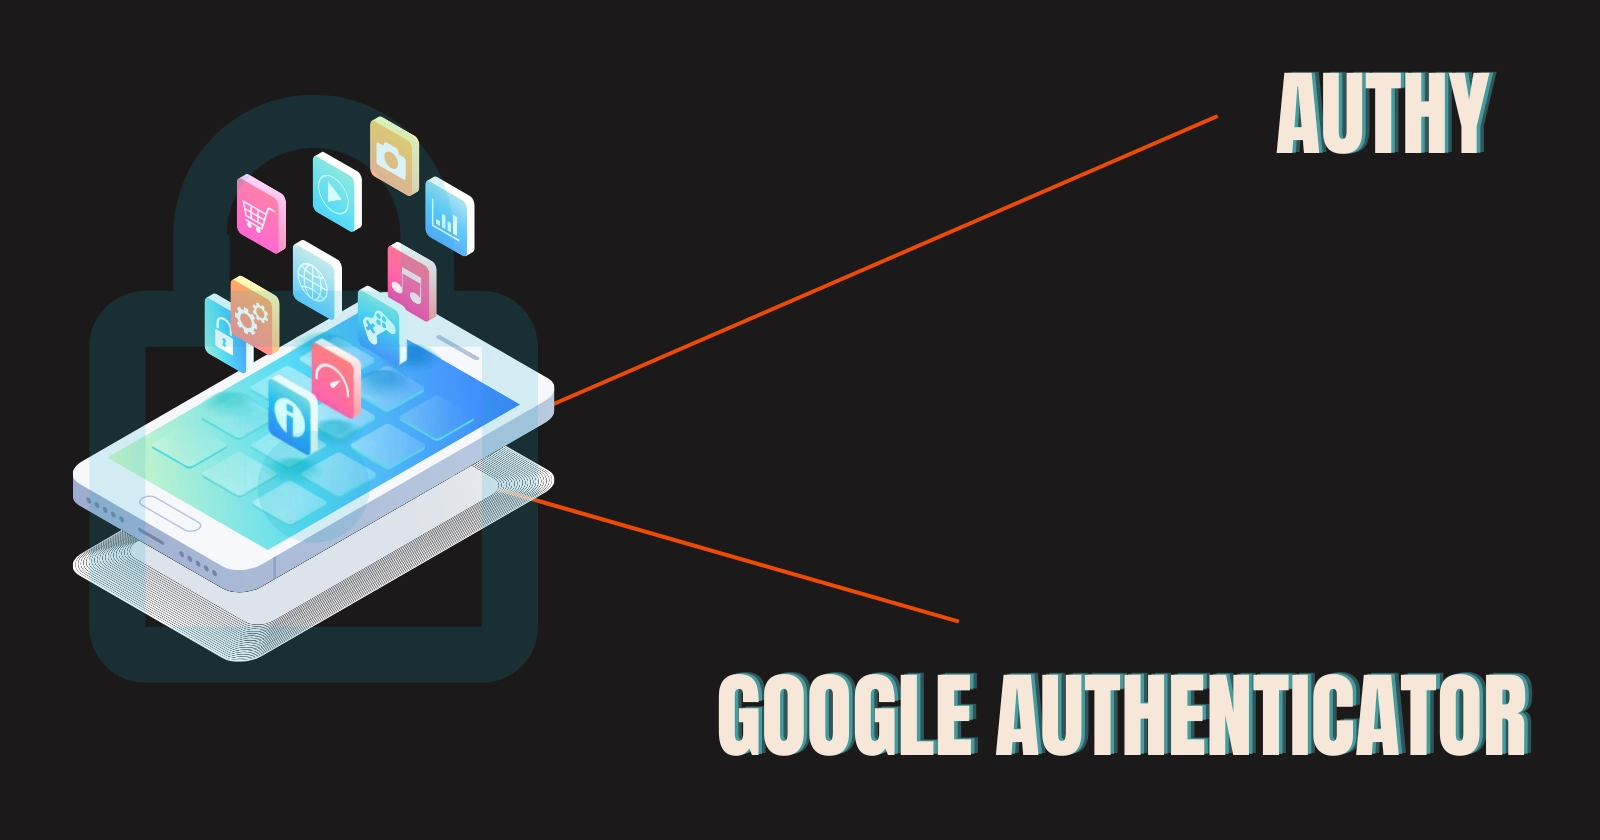 Authy vs. Google Authenticator